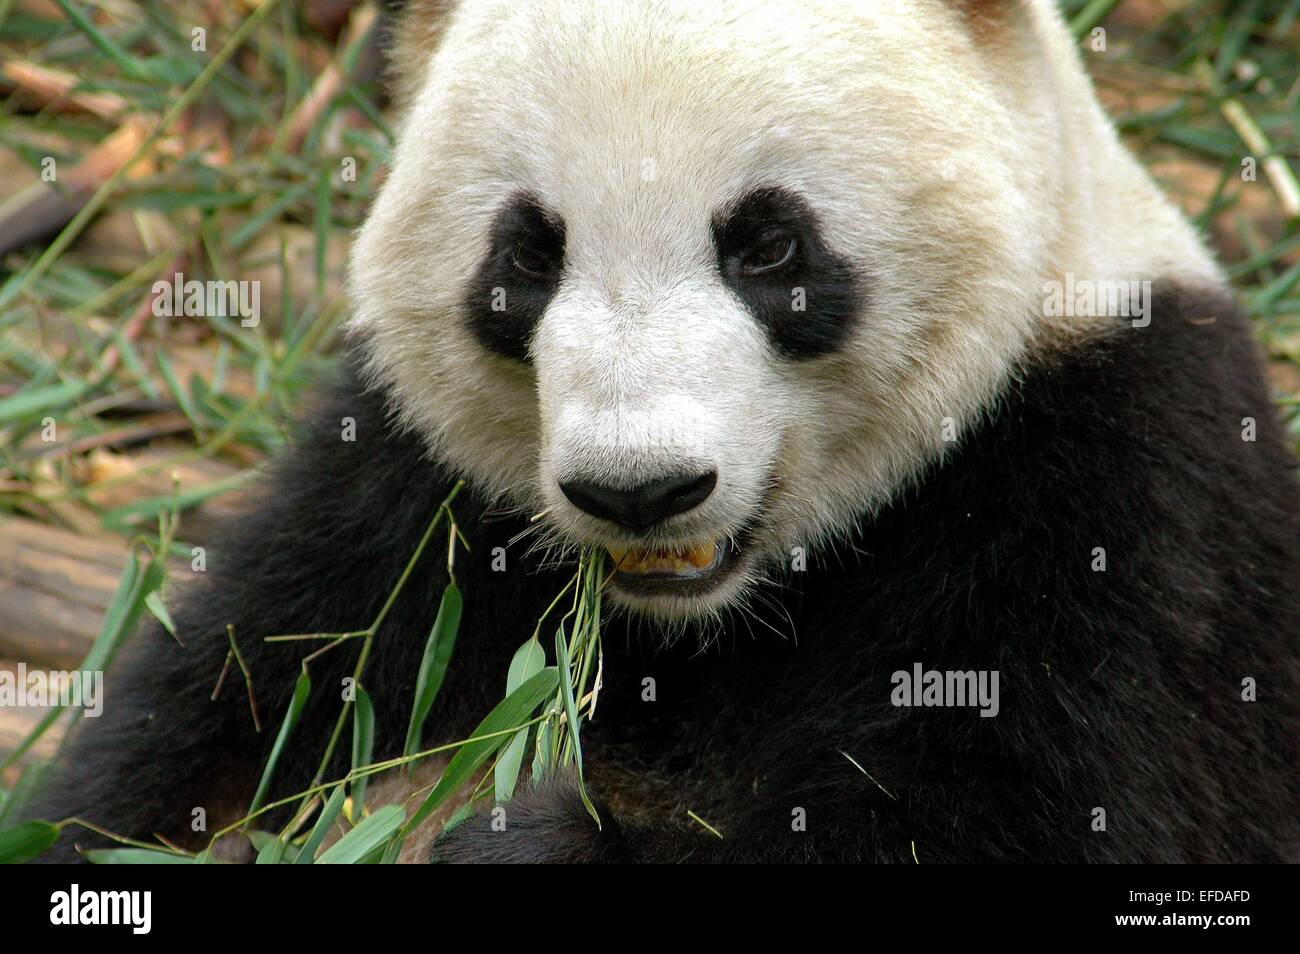 Chengdu, China:  A giant panda eating a shoot of bamboo at the Chengdu Panda Preserve Park Stock Photo